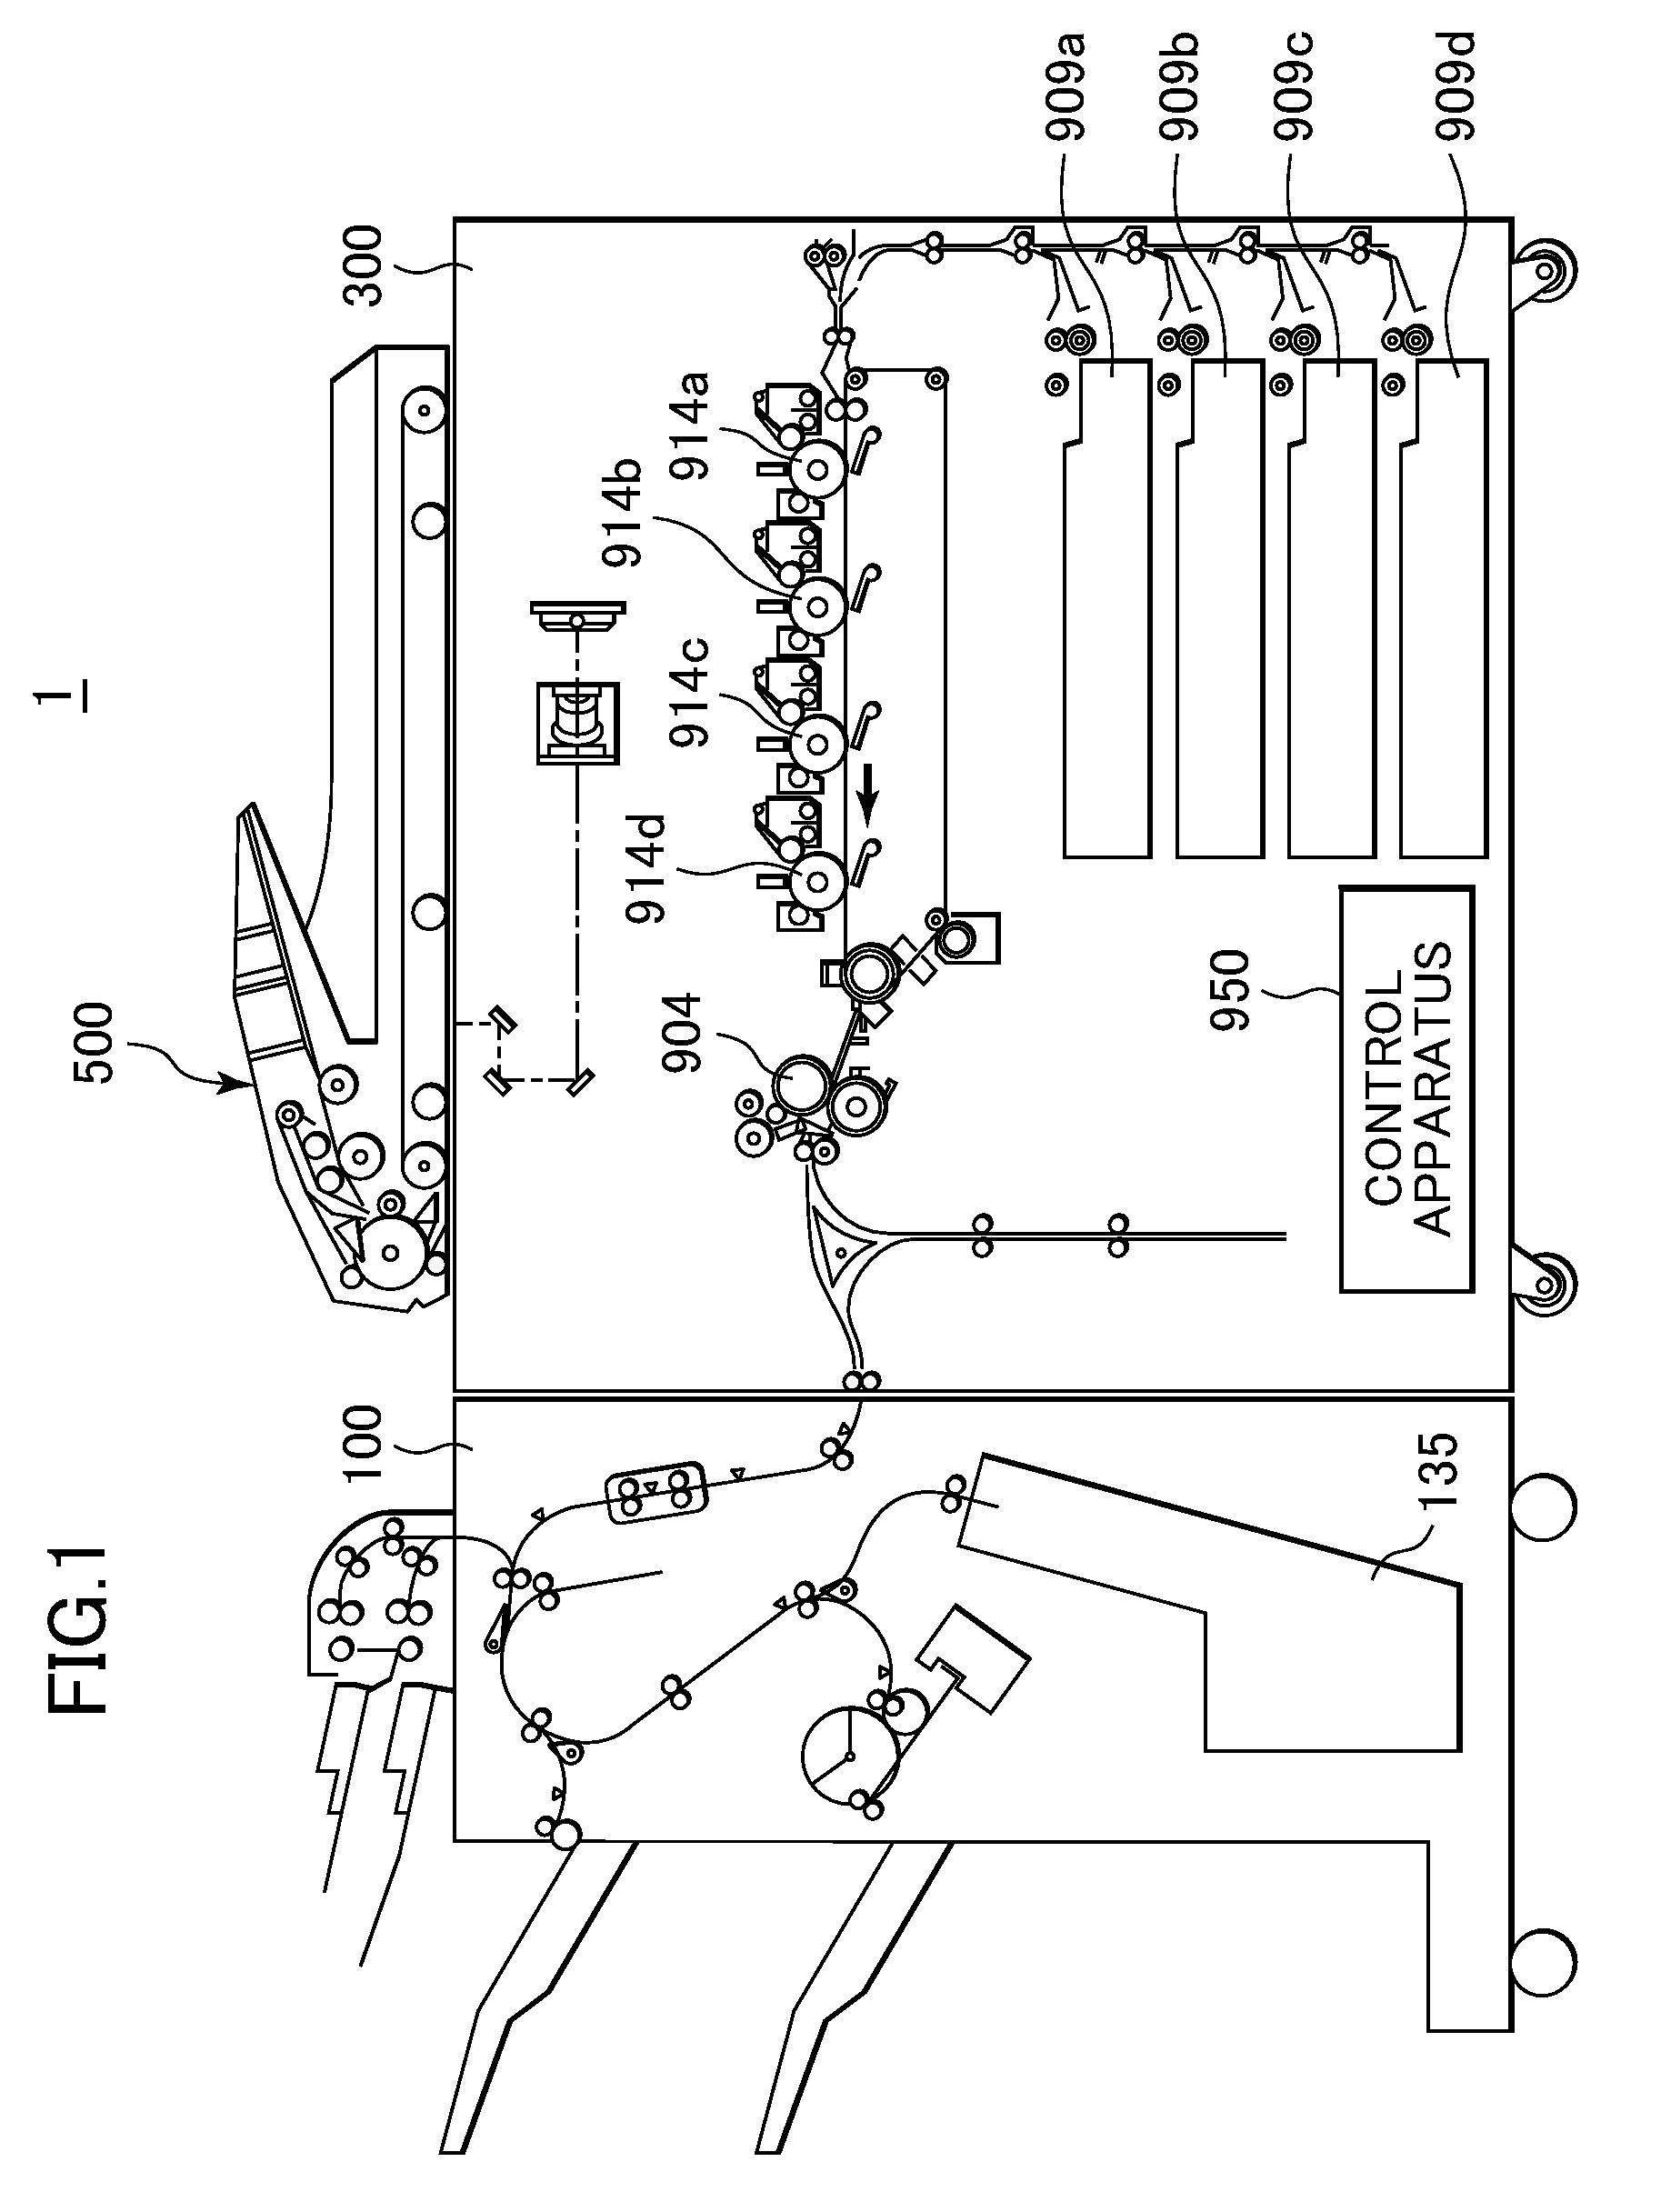 Sheet conveyance apparatus